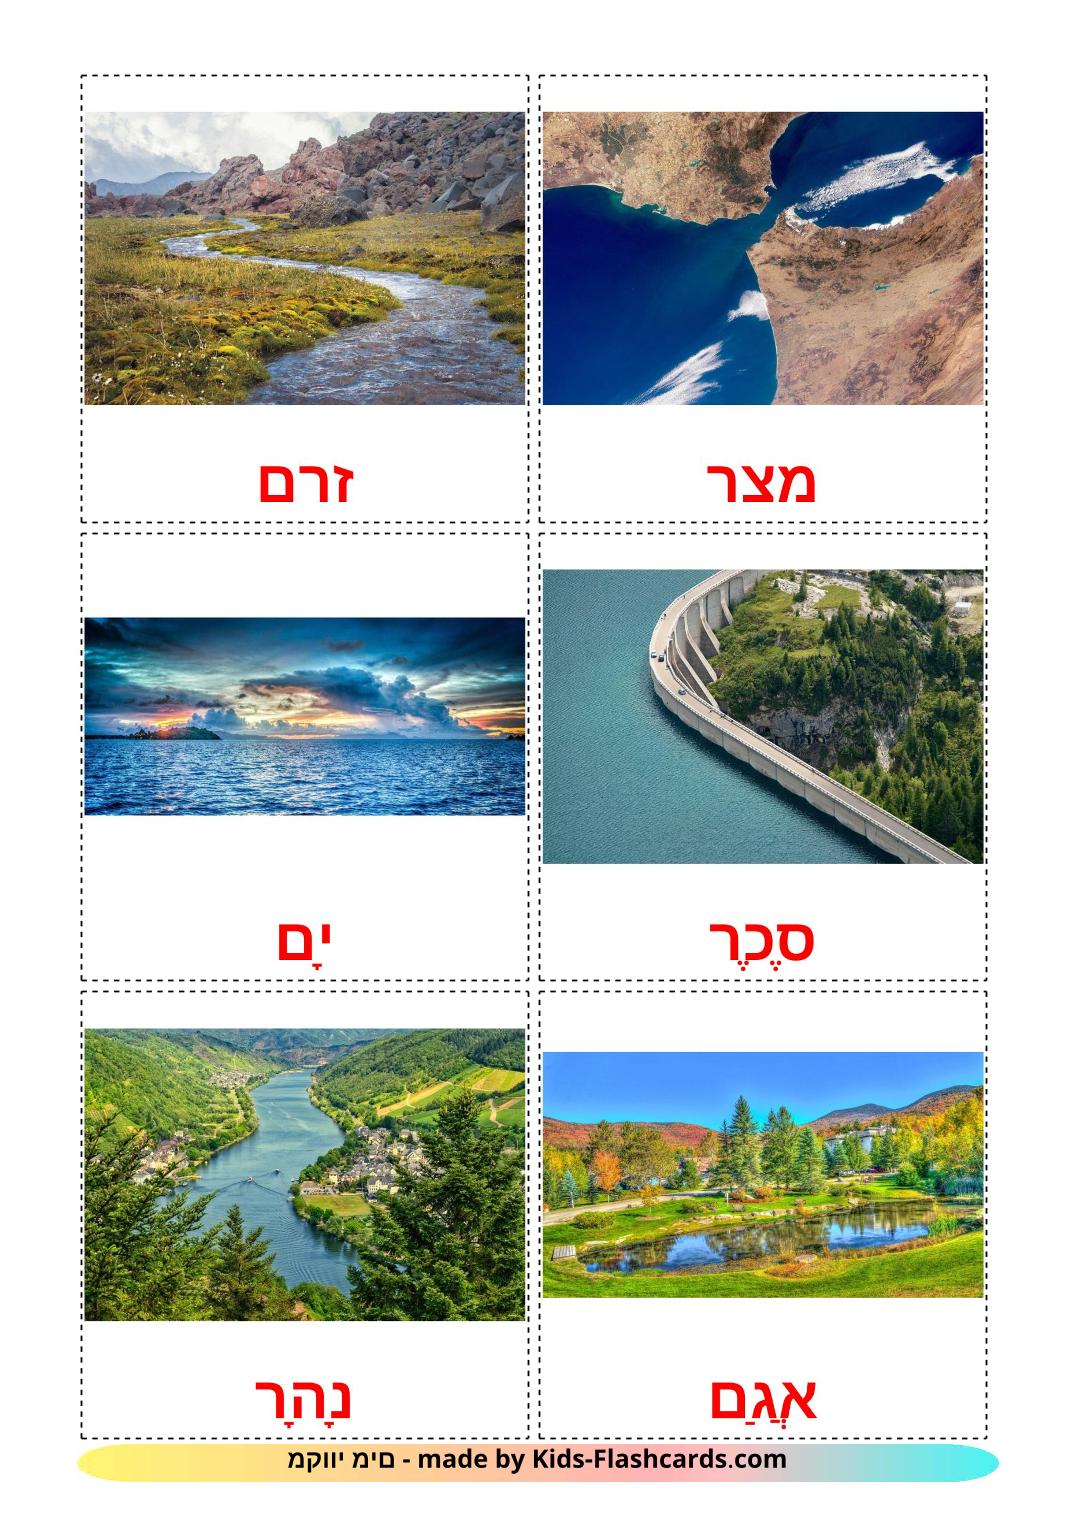 Corpi d'acqua - 30 flashcards ebraico stampabili gratuitamente